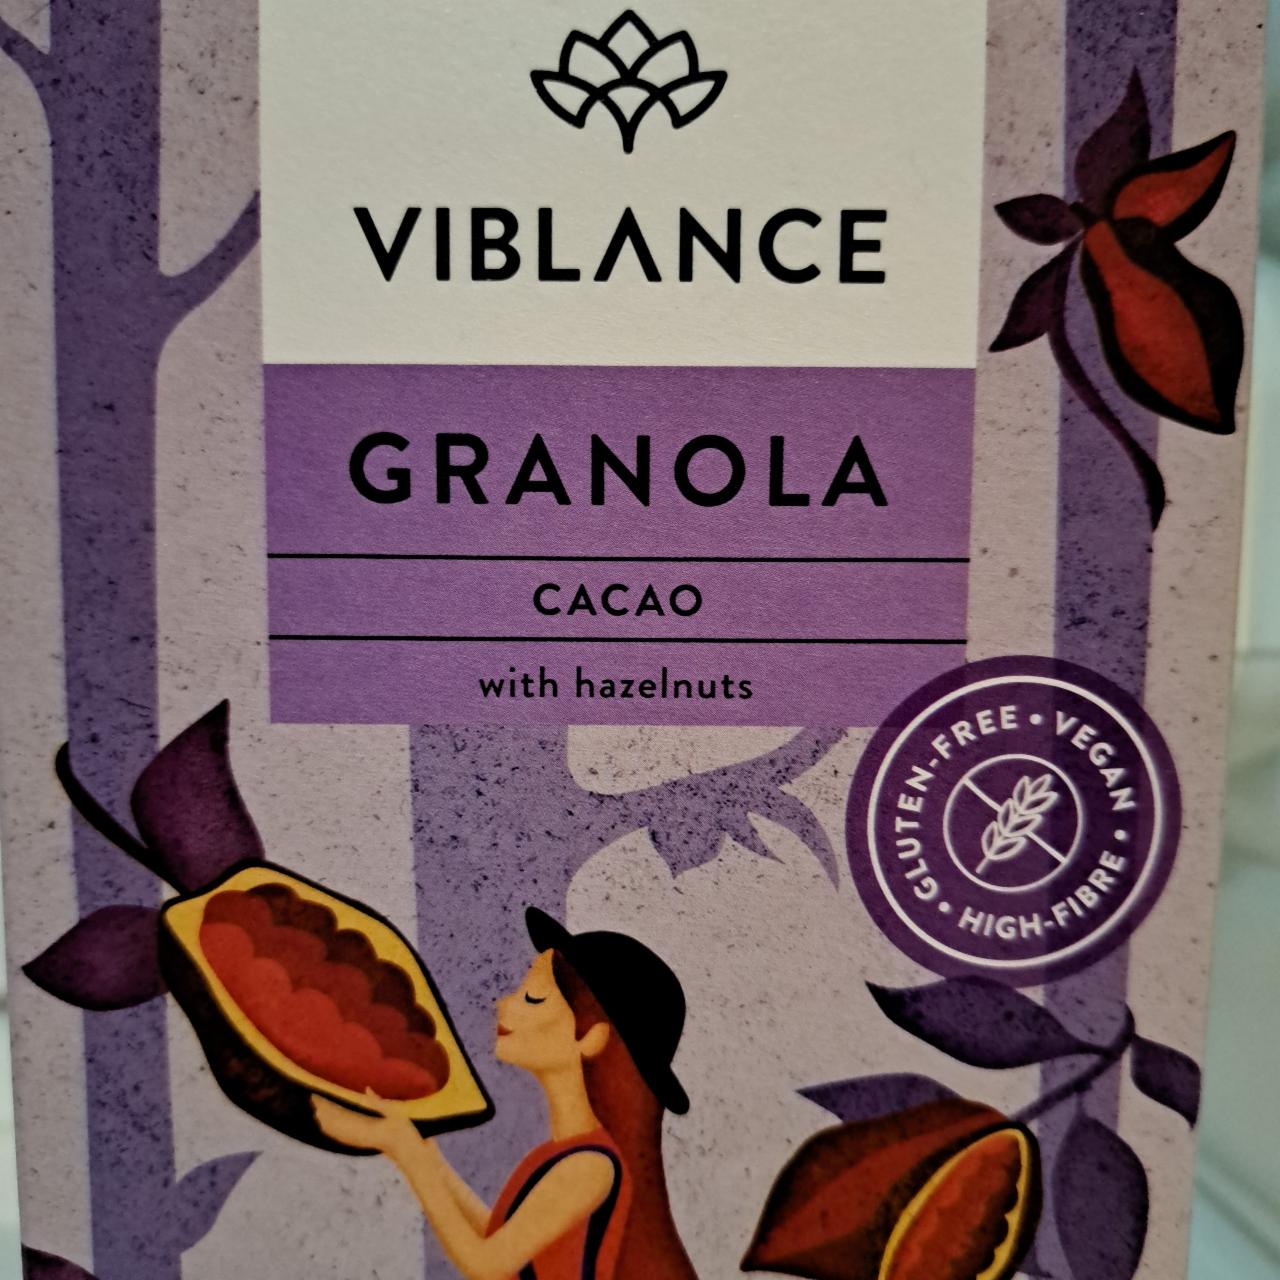 Képek - Granola cacao Viblance